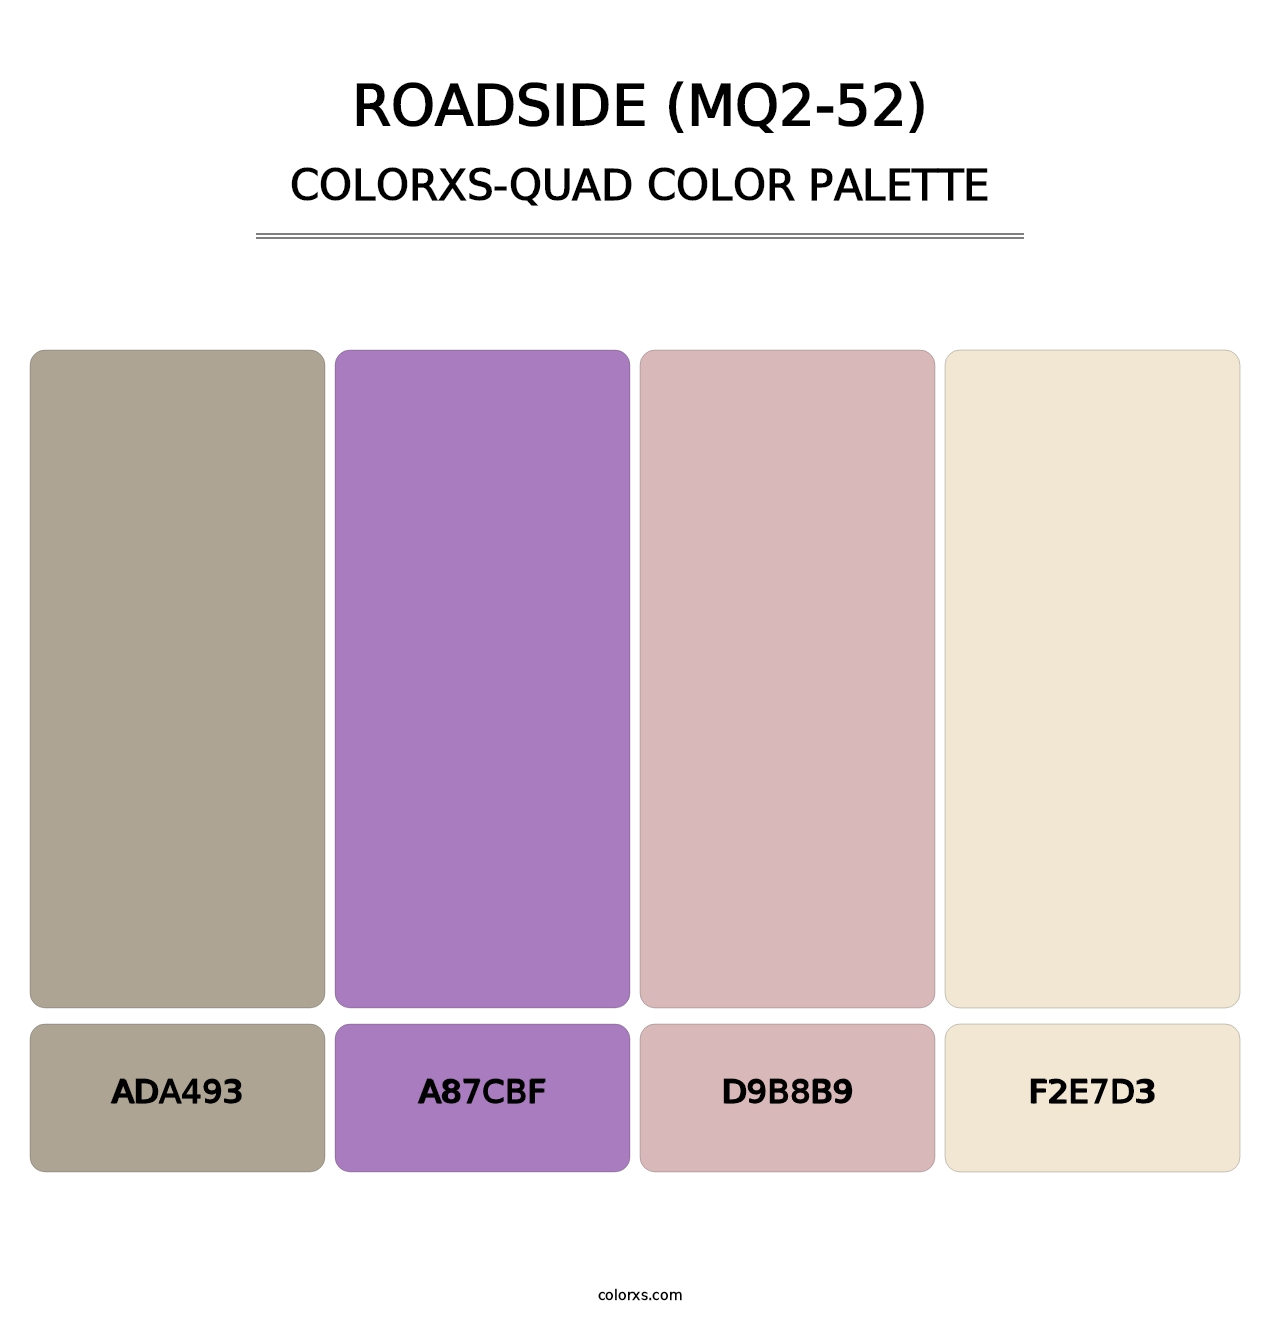 Roadside (MQ2-52) - Colorxs Quad Palette